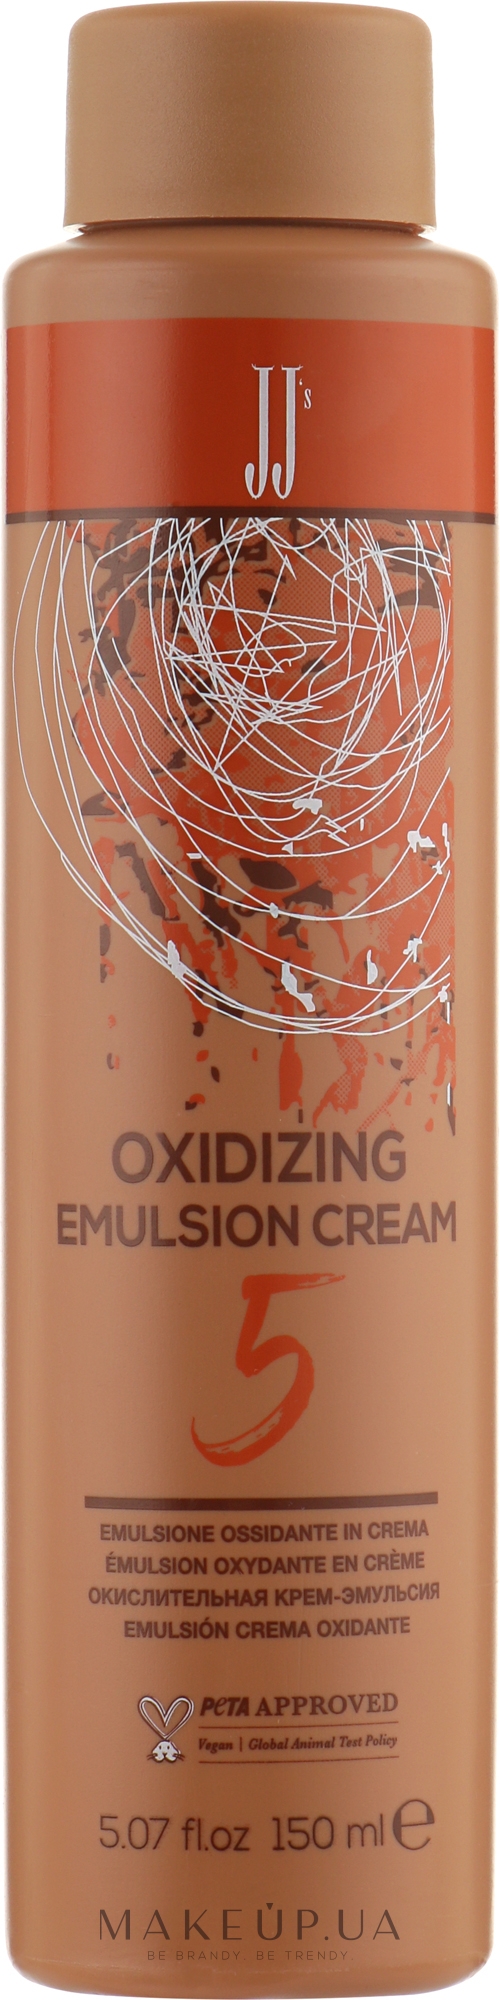 Окислювальна крем-емульсія 5VOL 1.5% - JJ's Oxidizing Emulsion Cream — фото 150ml